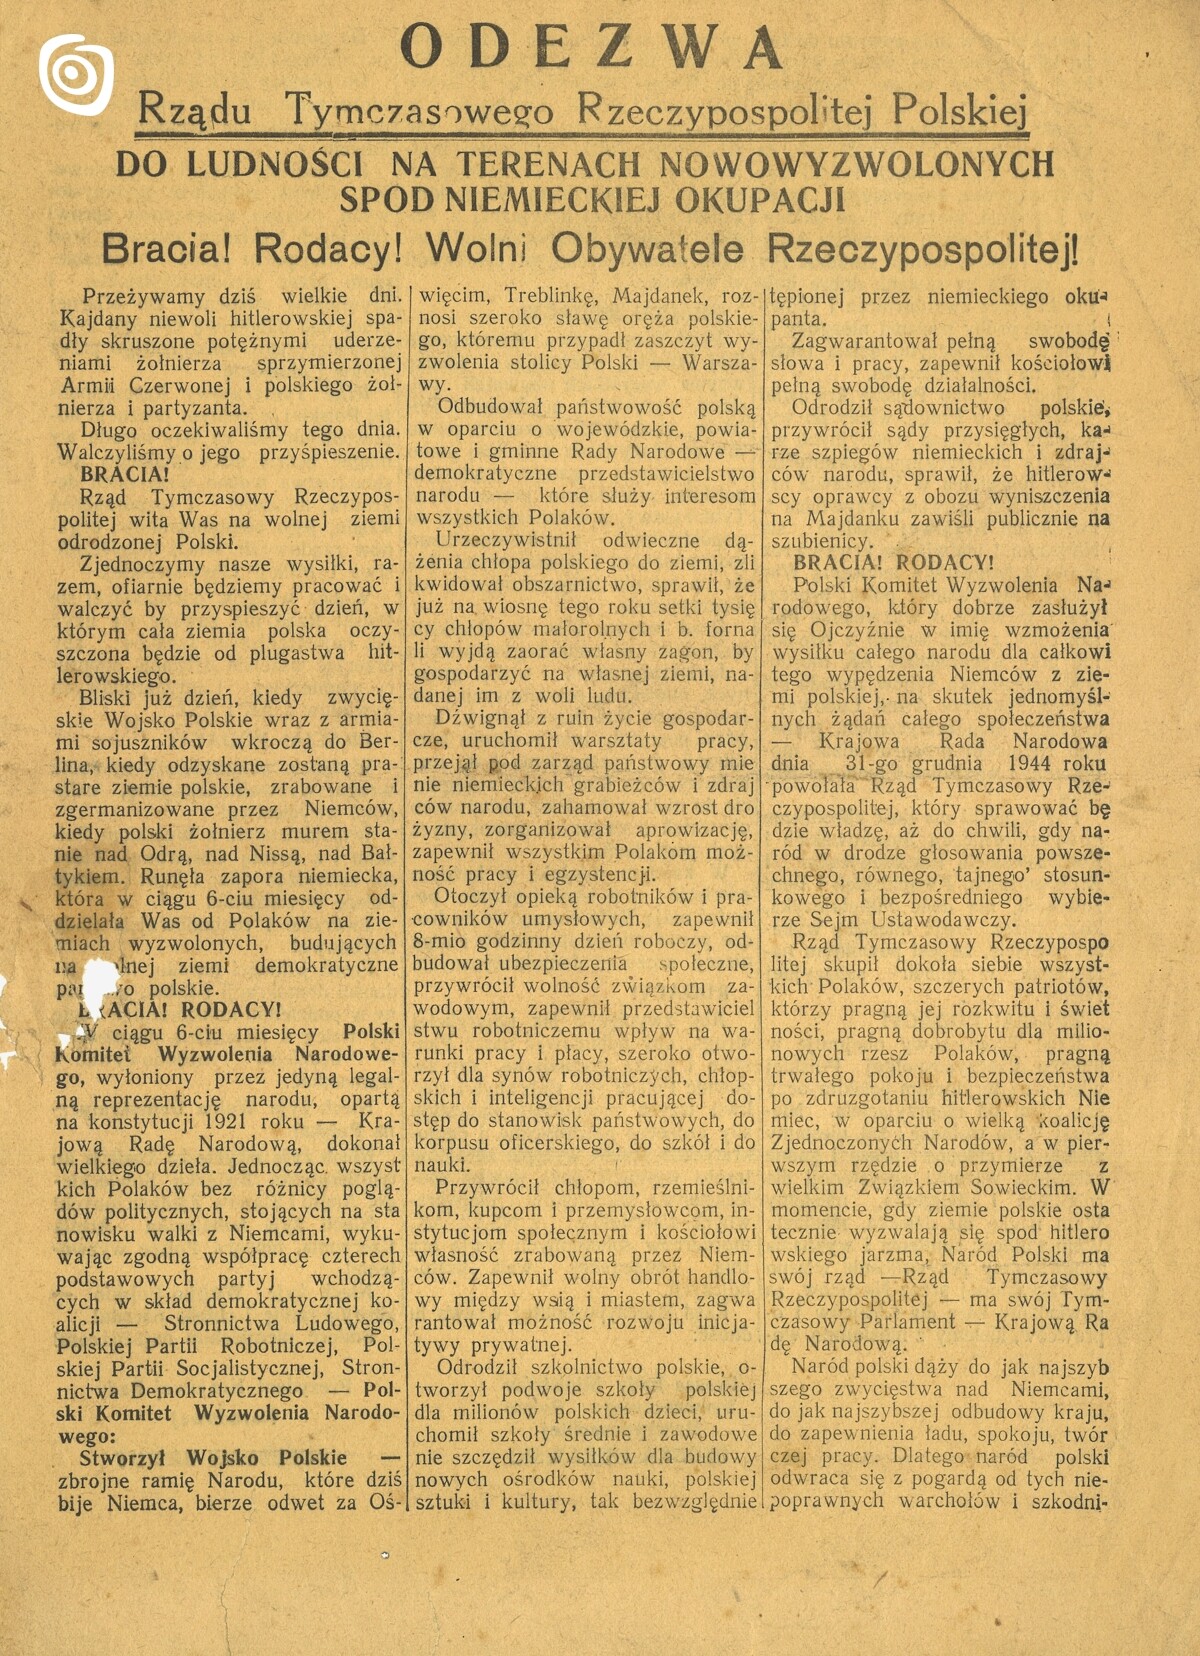 Dokument - Odezwa, Warszawa, 1944-1945 r.